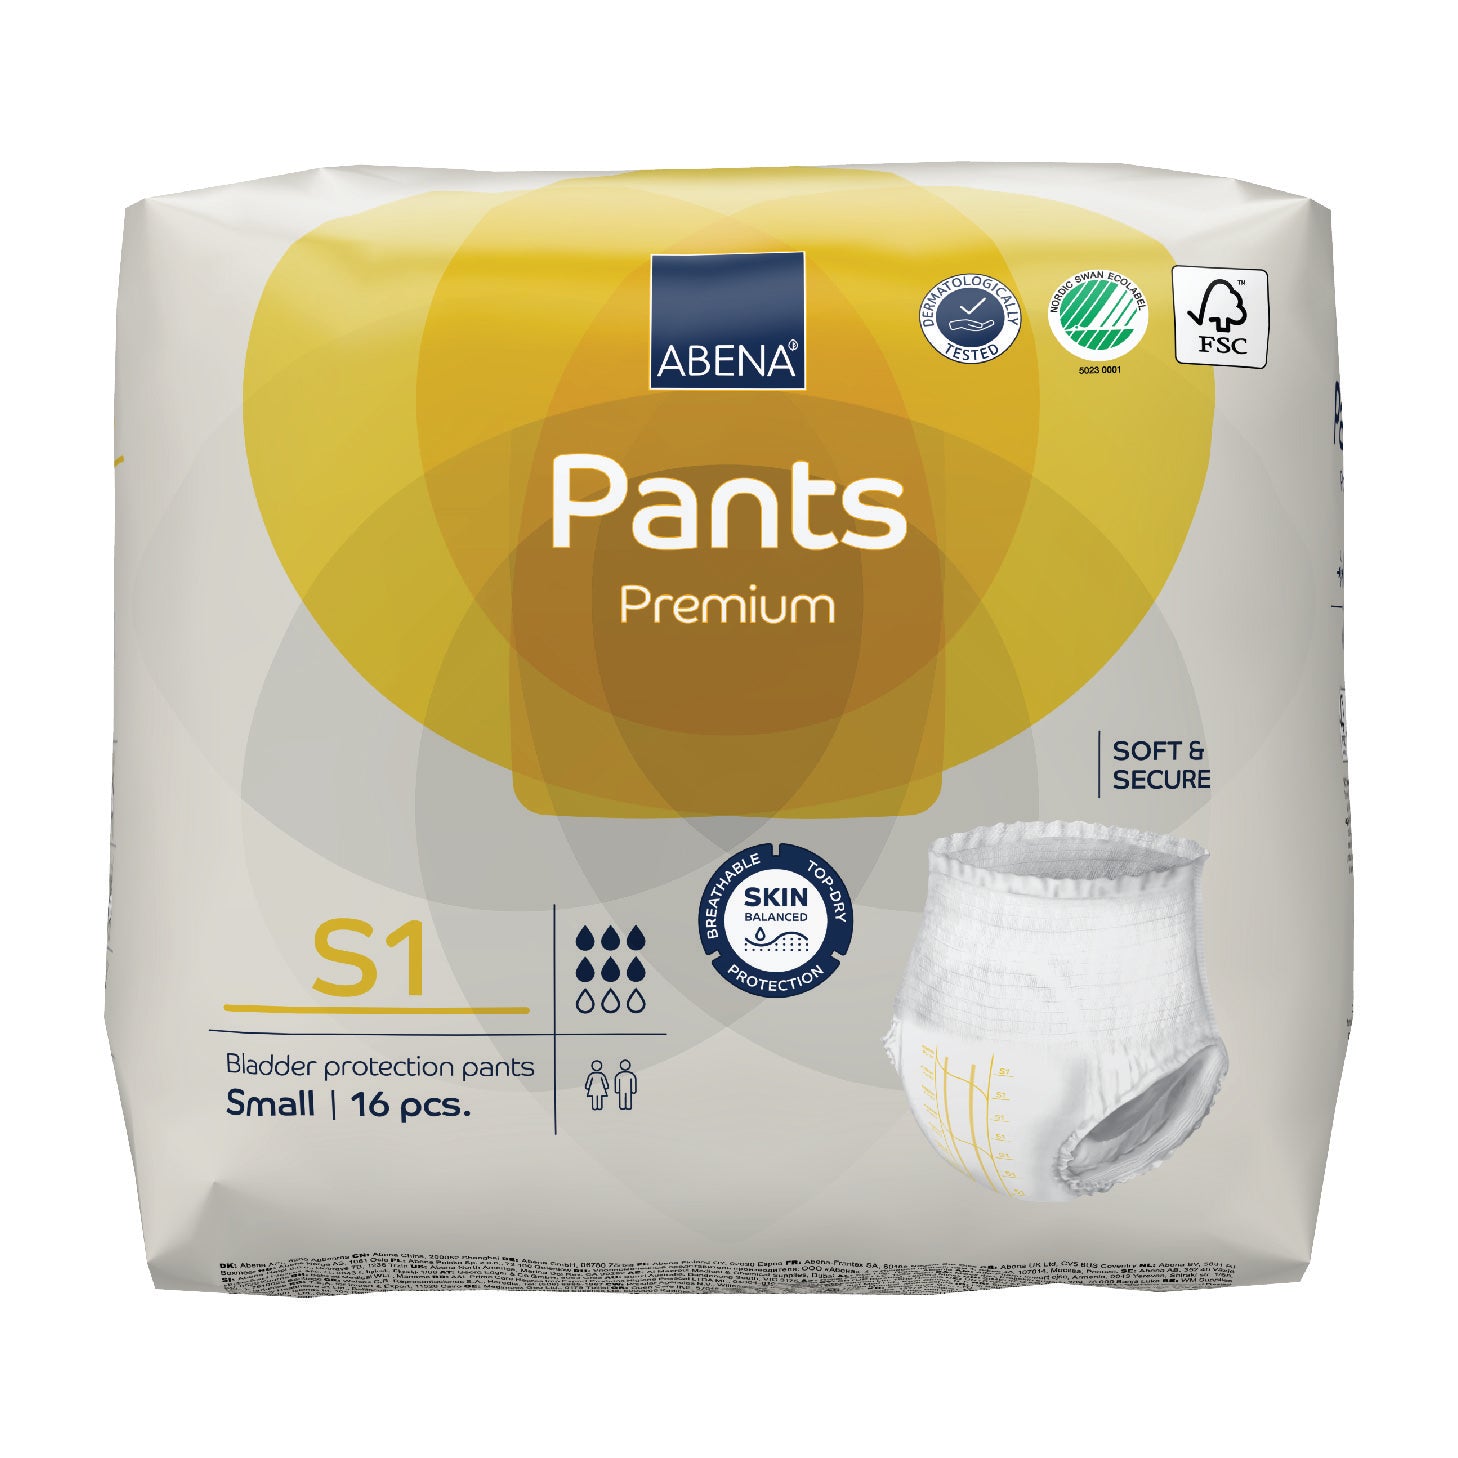 Protective Underwear, Small-Medium, 18 units